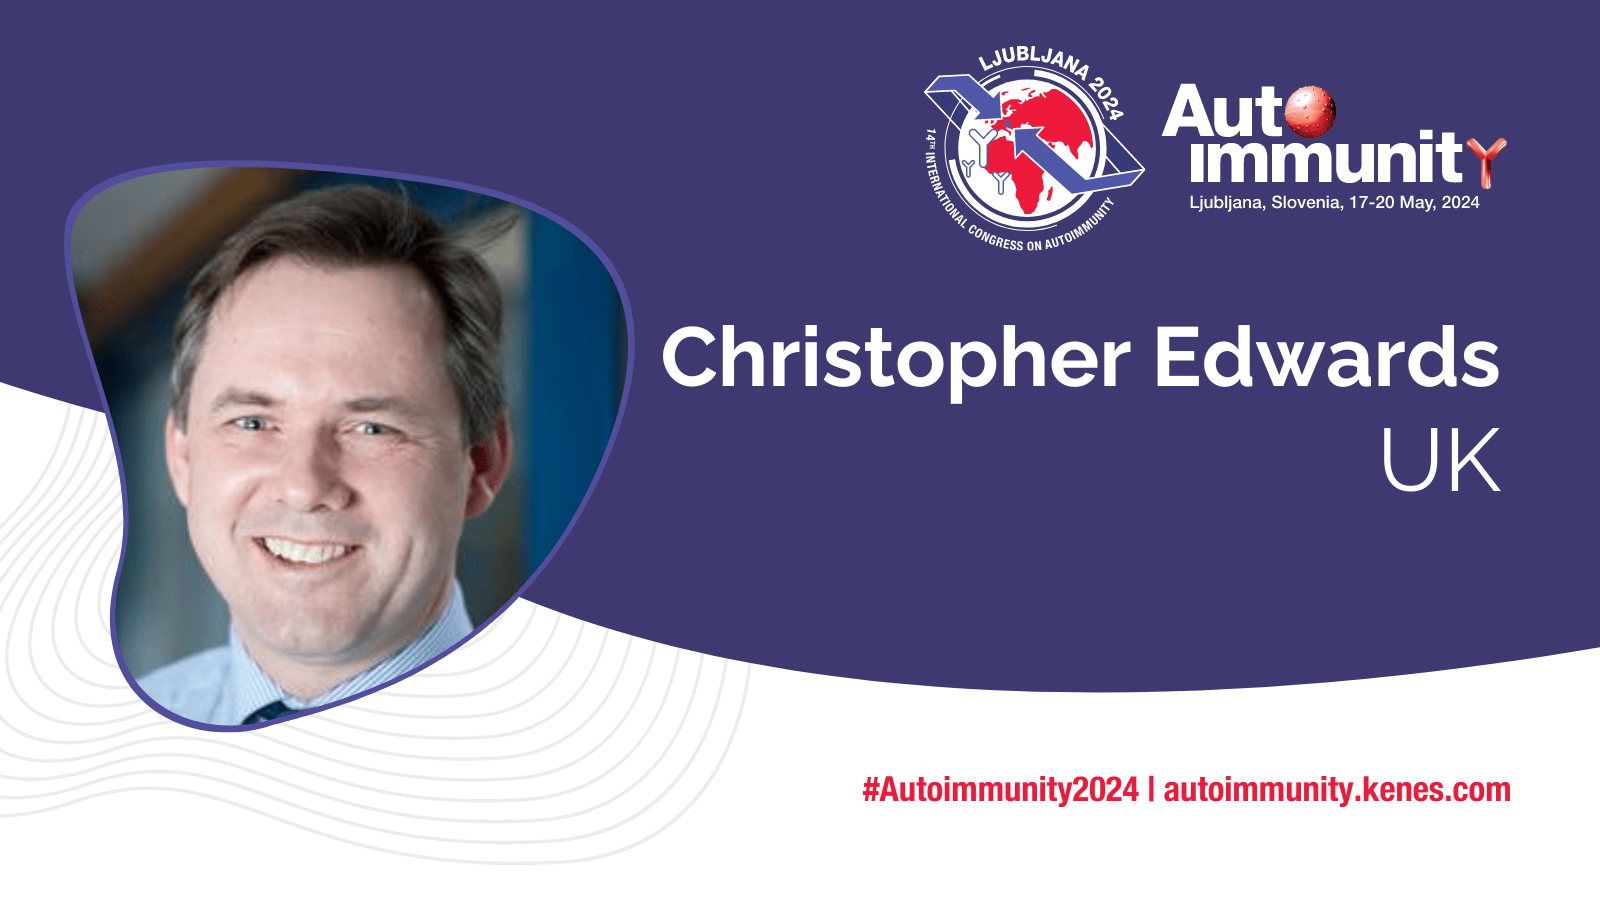 International Congress on Autoimmunity 2024 Speaker Chris Edwards